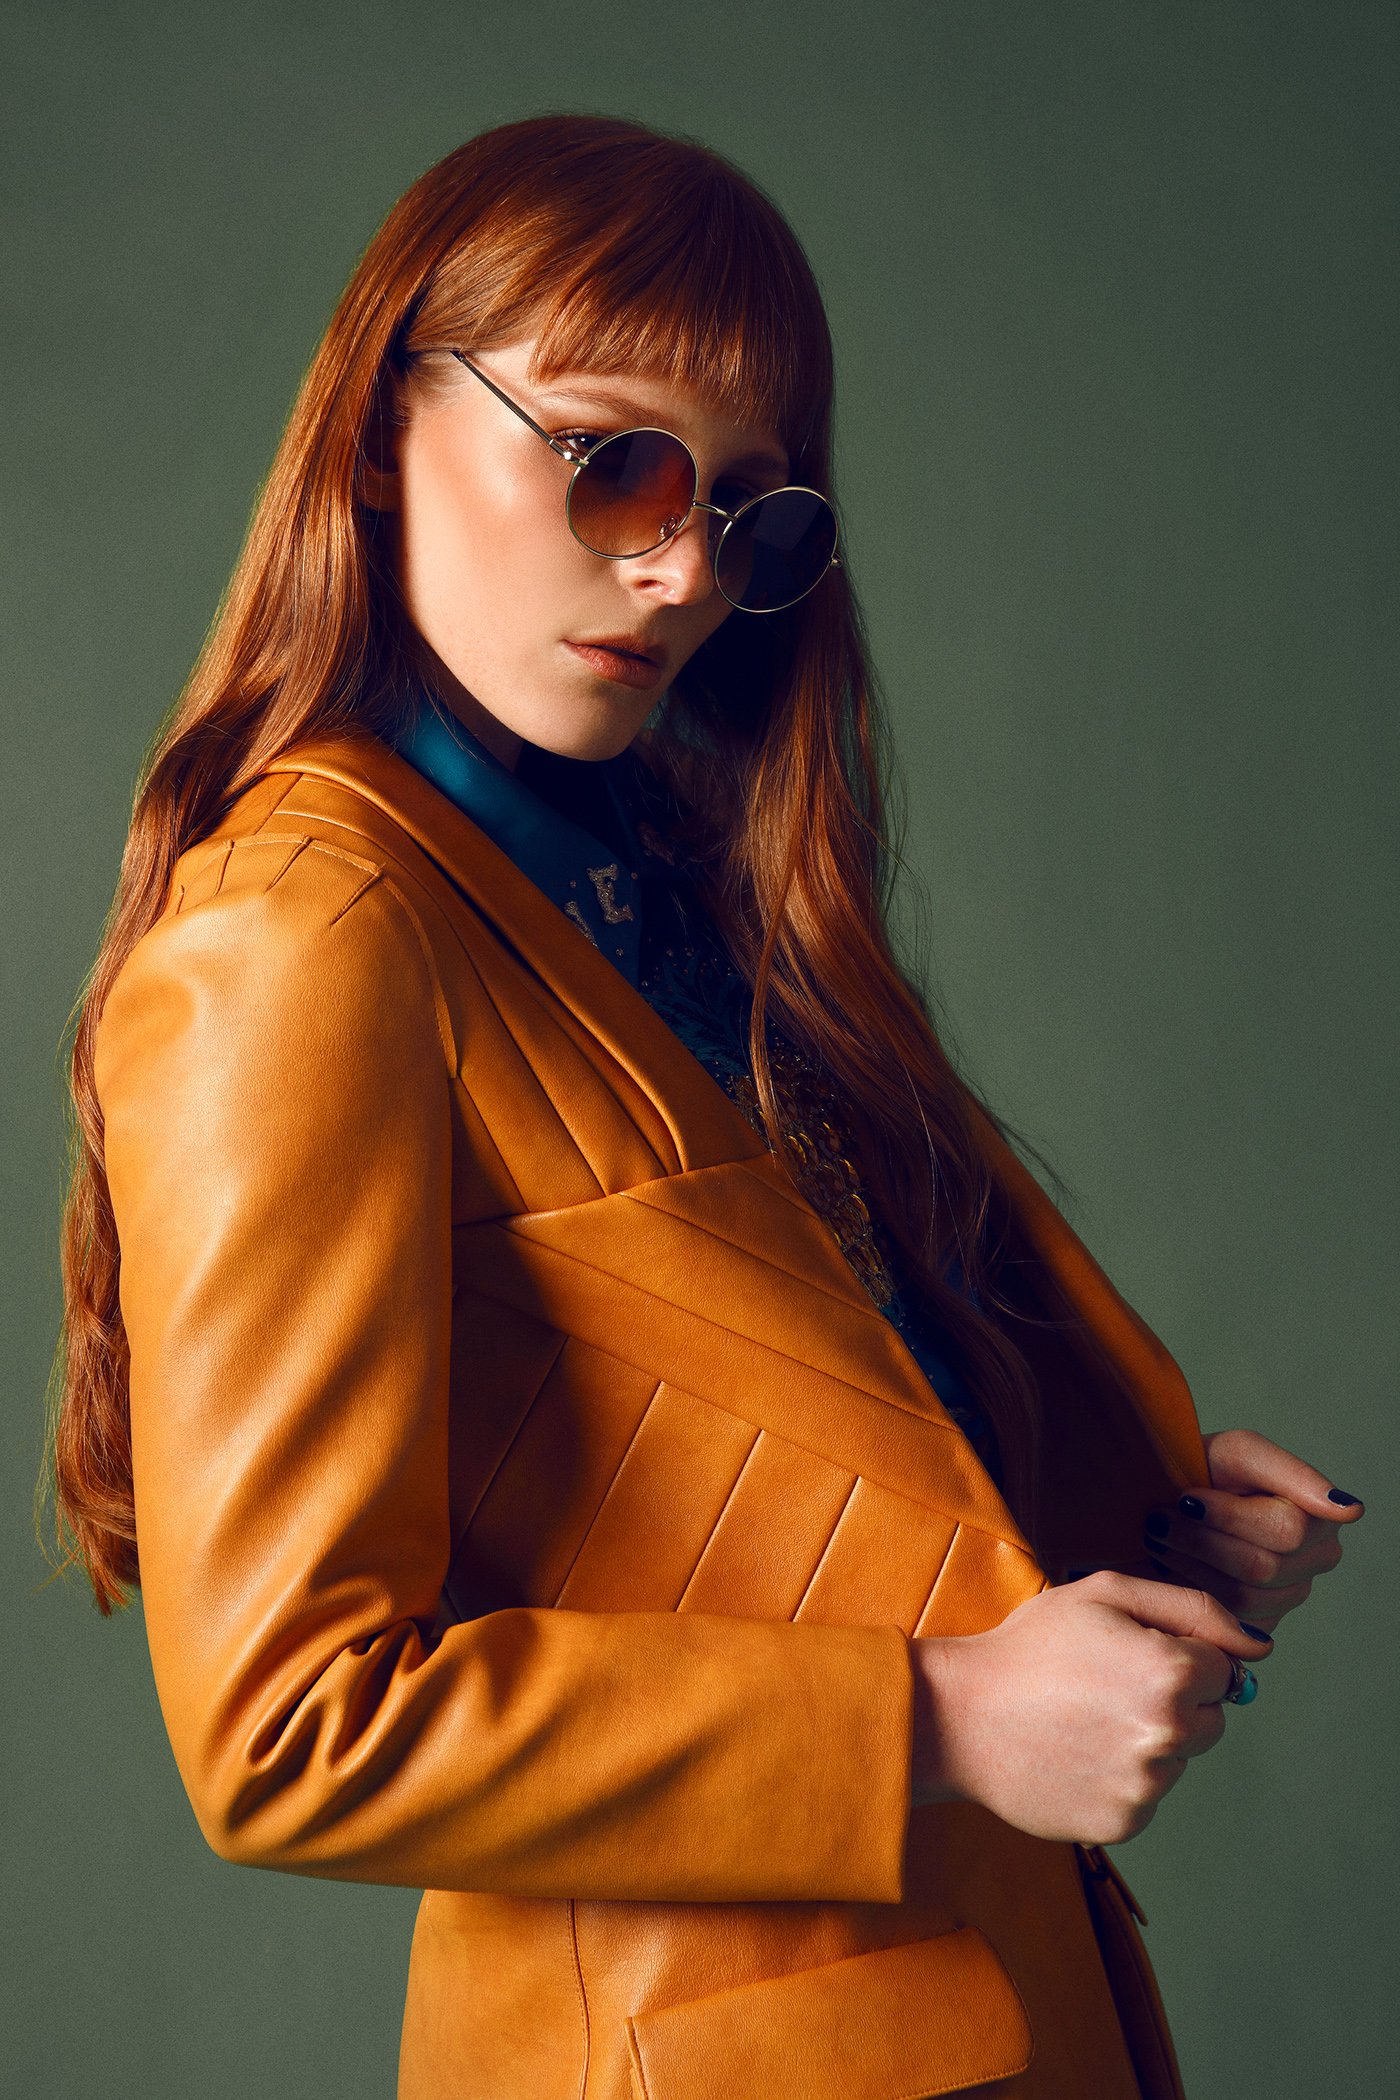 Fotografia moda styling  Fashionstyling redhead models fashiondesign clothes makeup digitalphotography